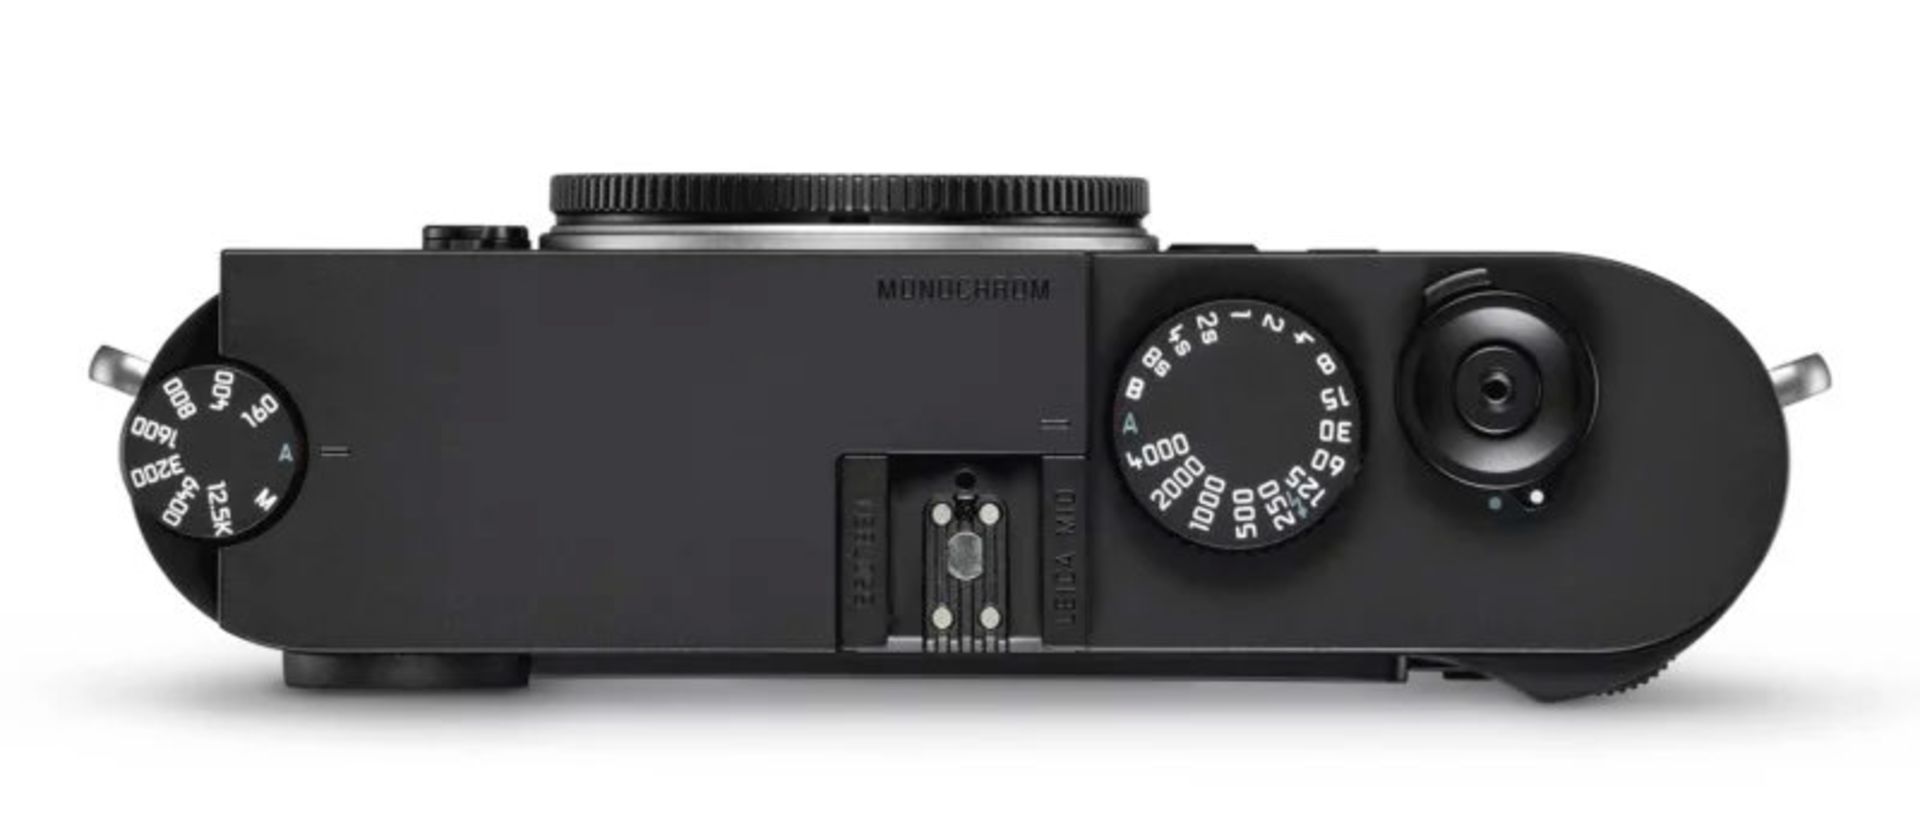 دوربین مونوکروم لایکا M10 / Leica M10 monochrome